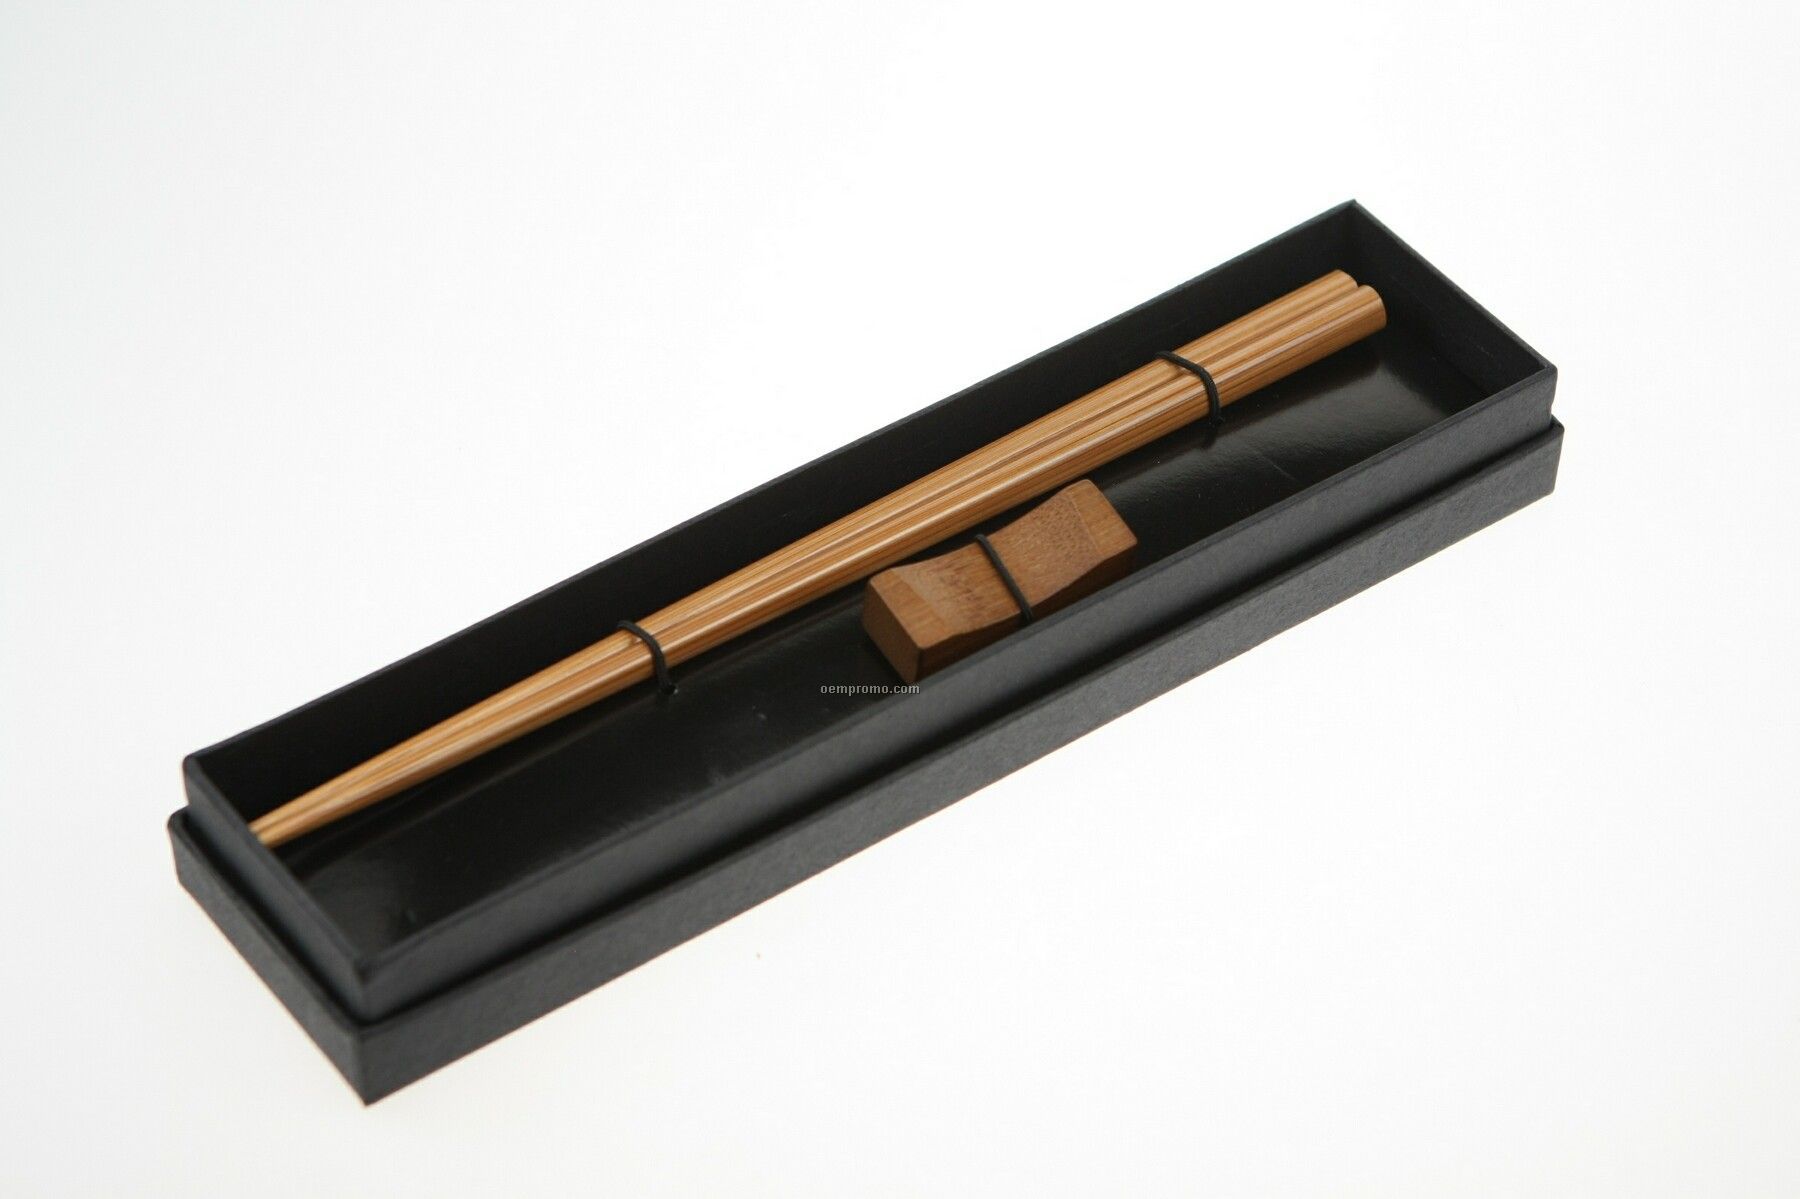 Bamboo Chopsticks And Rest Set In Black Cardboard Box